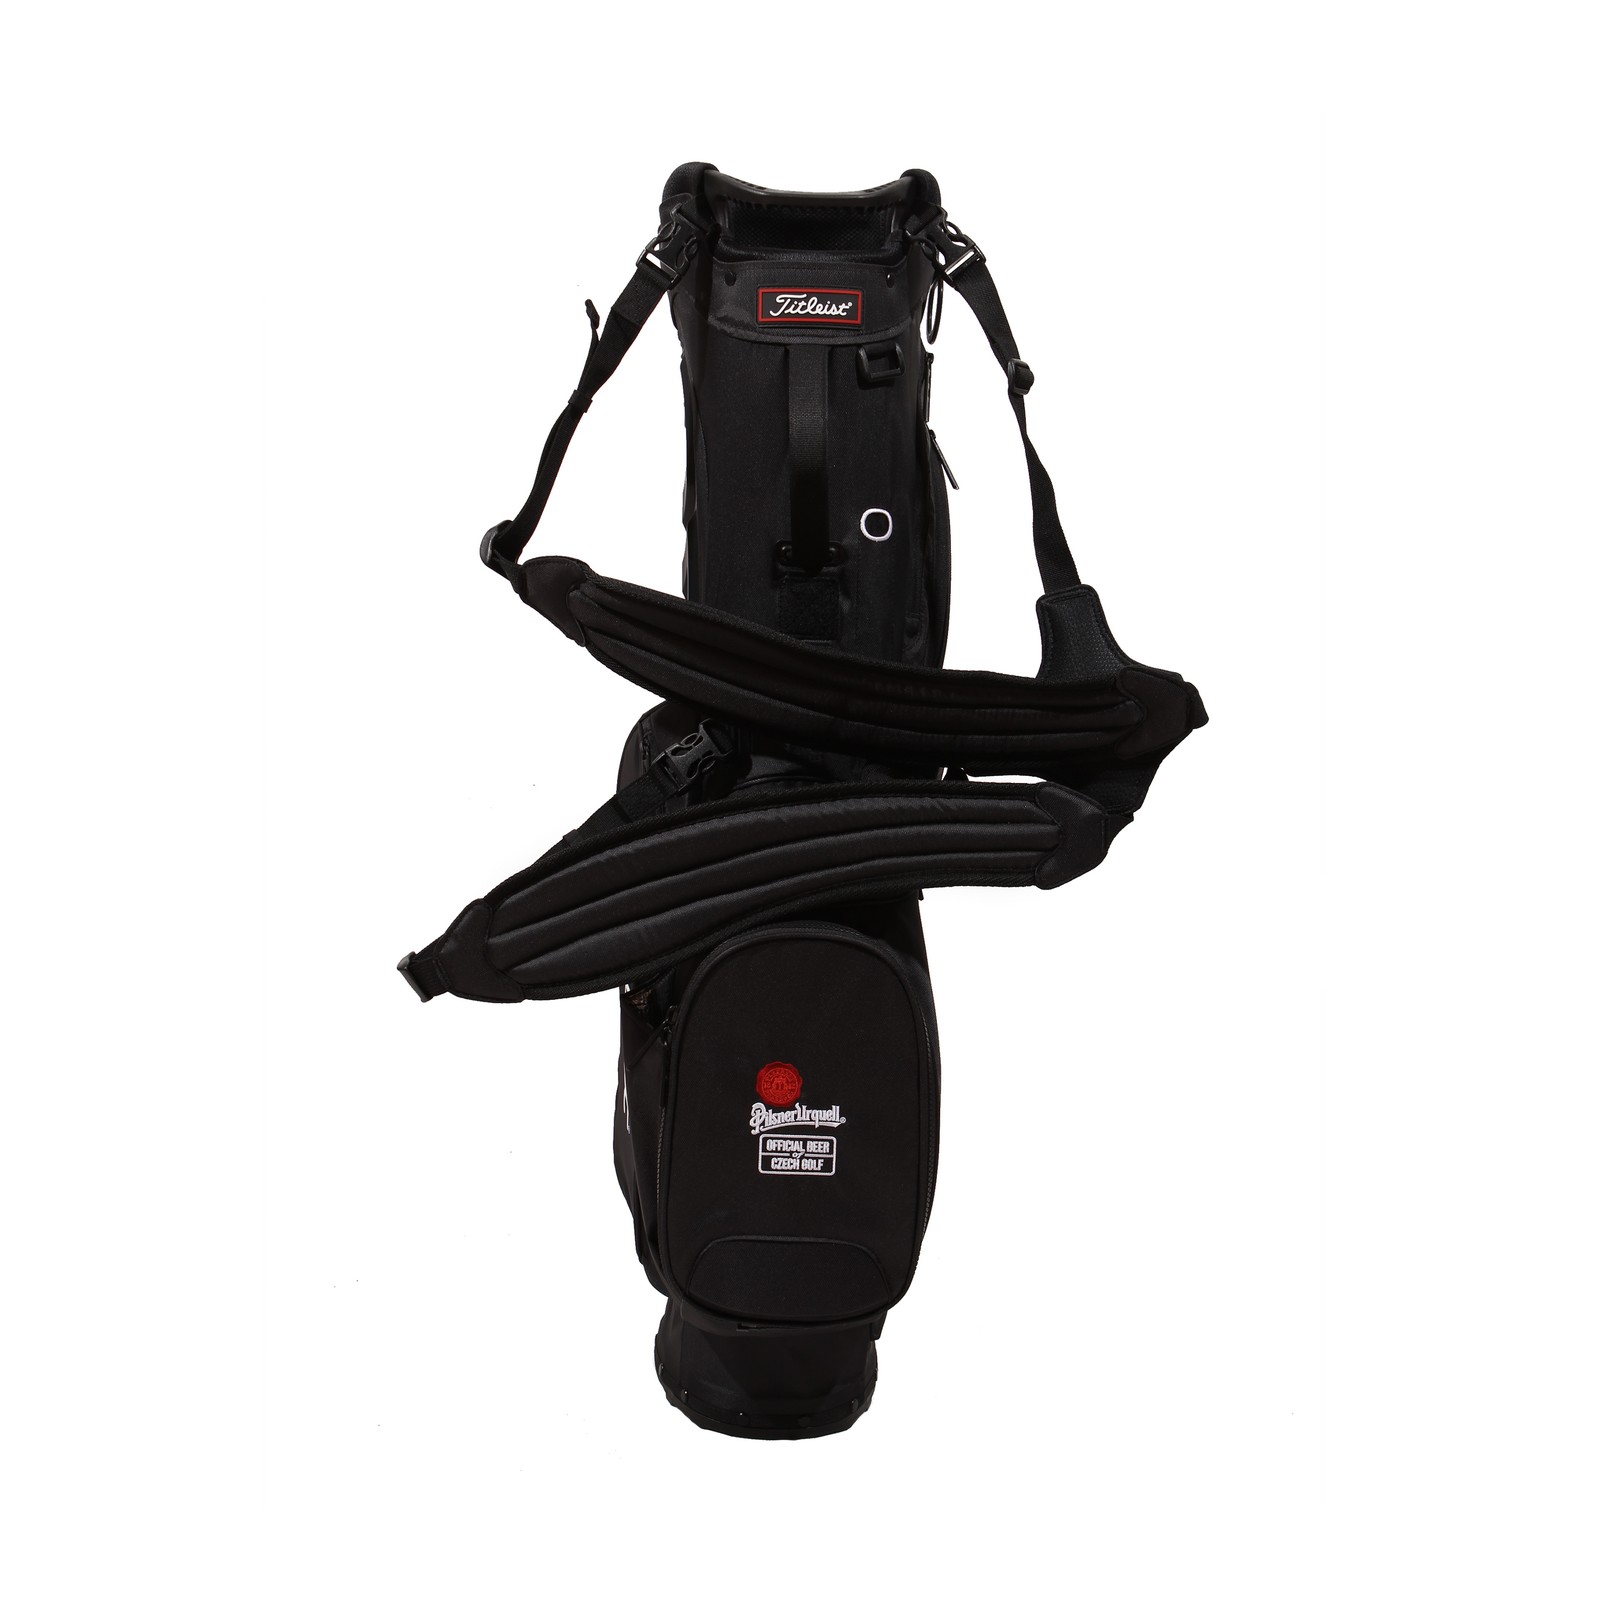 Titleist golf bag for 4 golf clubs, black